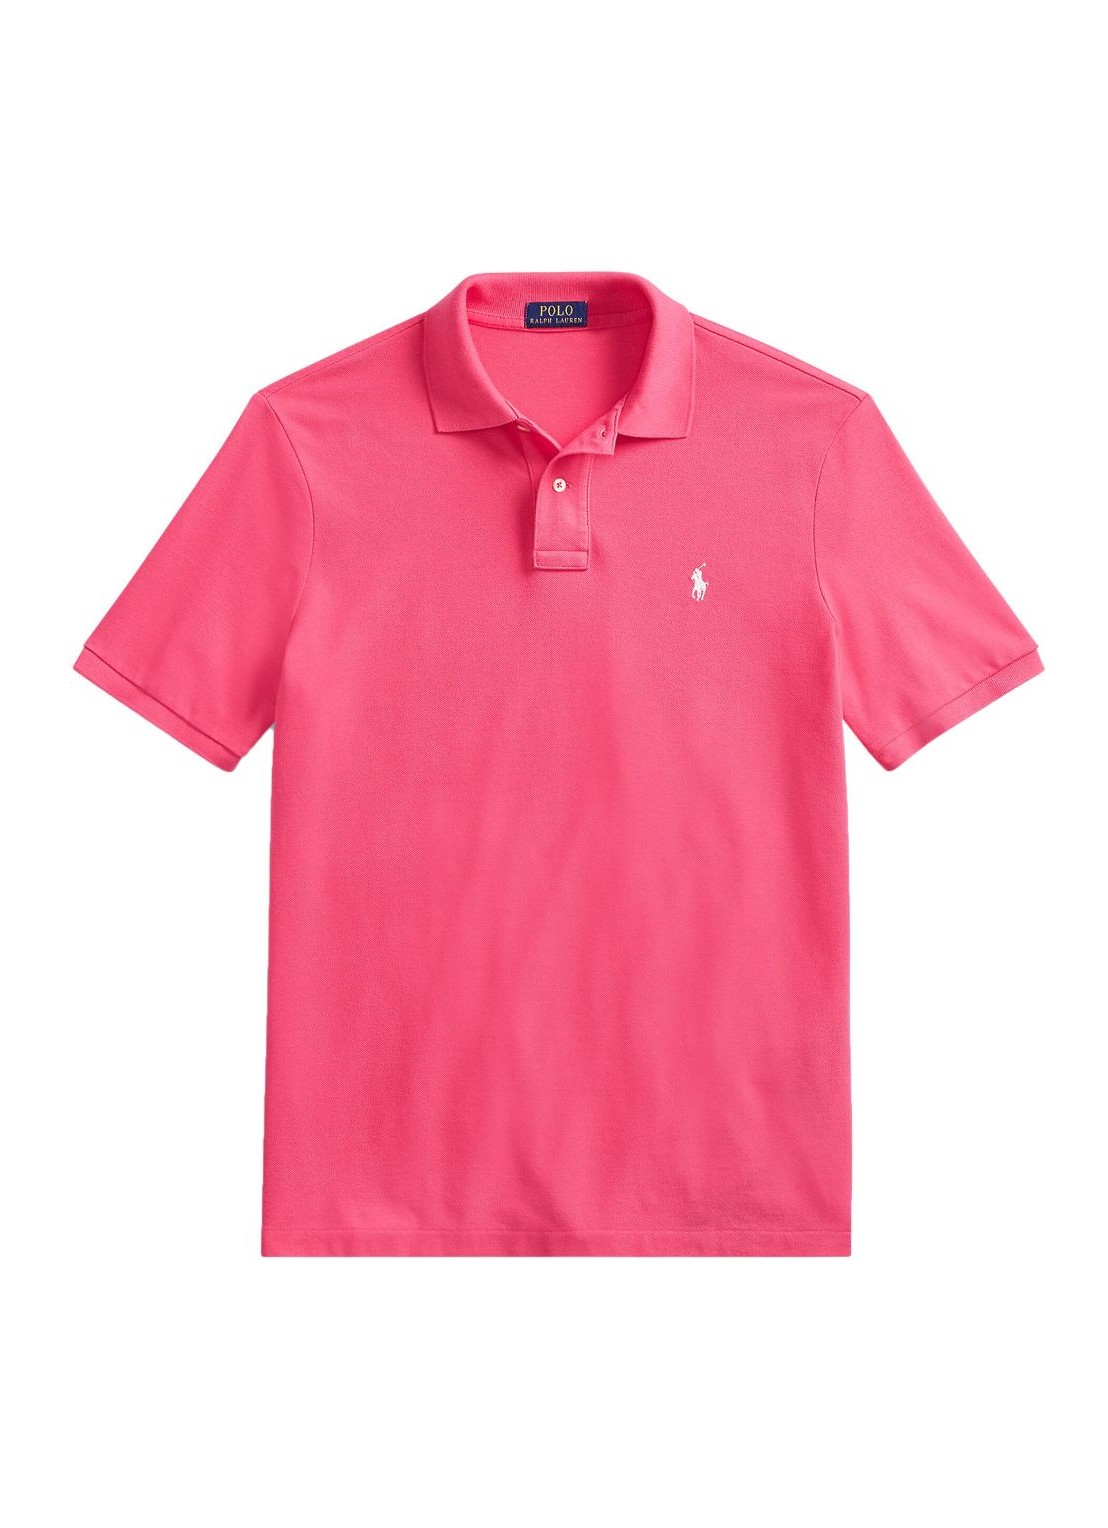 Polo polo ralph lauren polo man sskccmslm1-short sleeve-knit 710782592007 hot pink c2740 talla rosa
